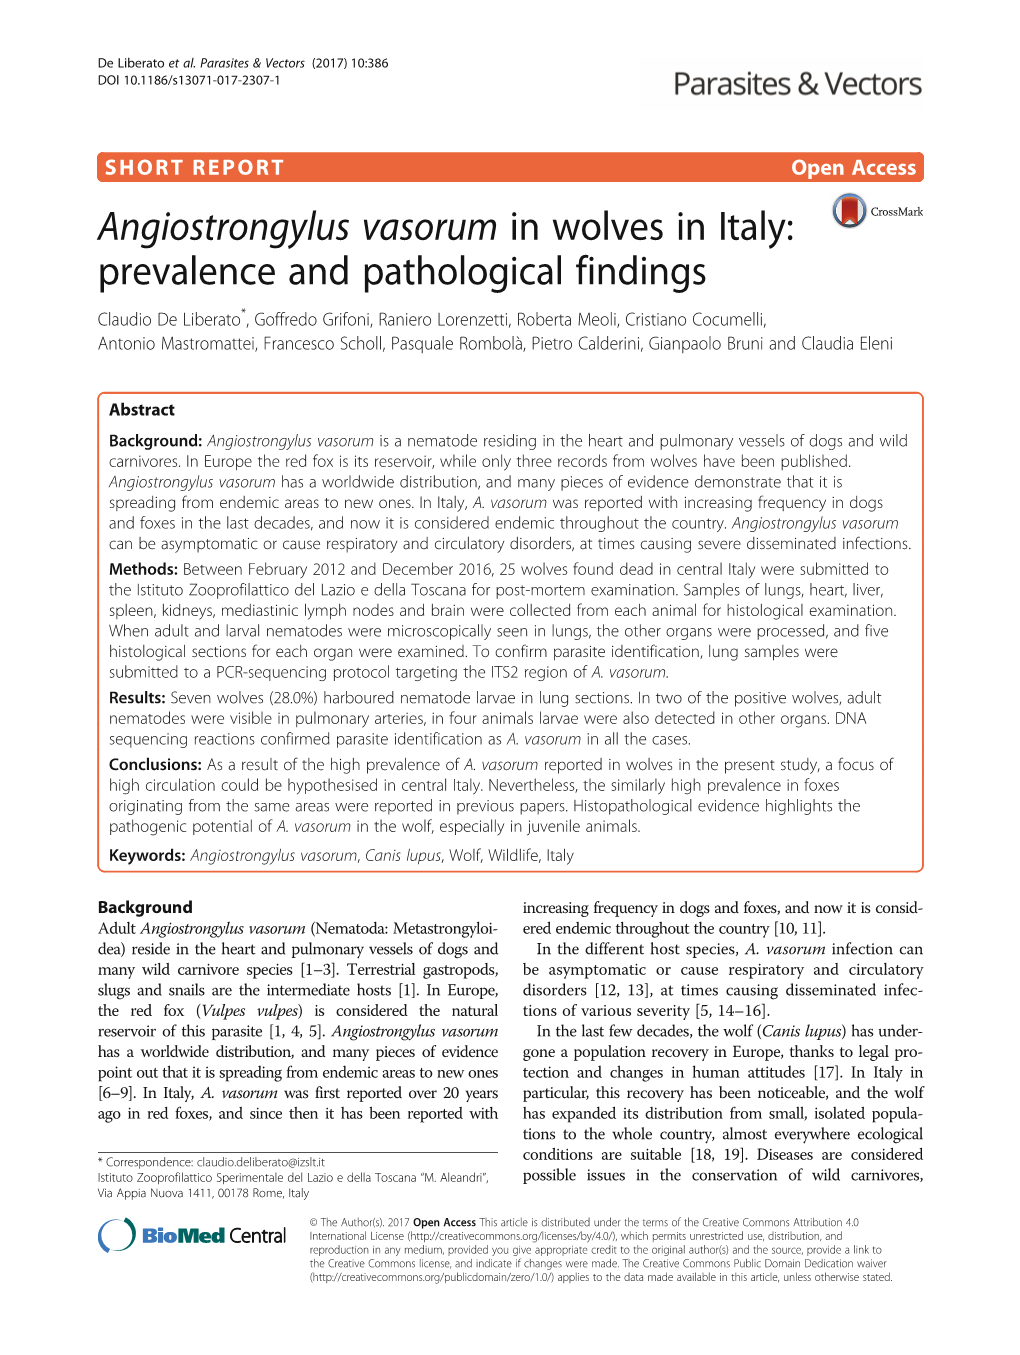 Angiostrongylus Vasorum